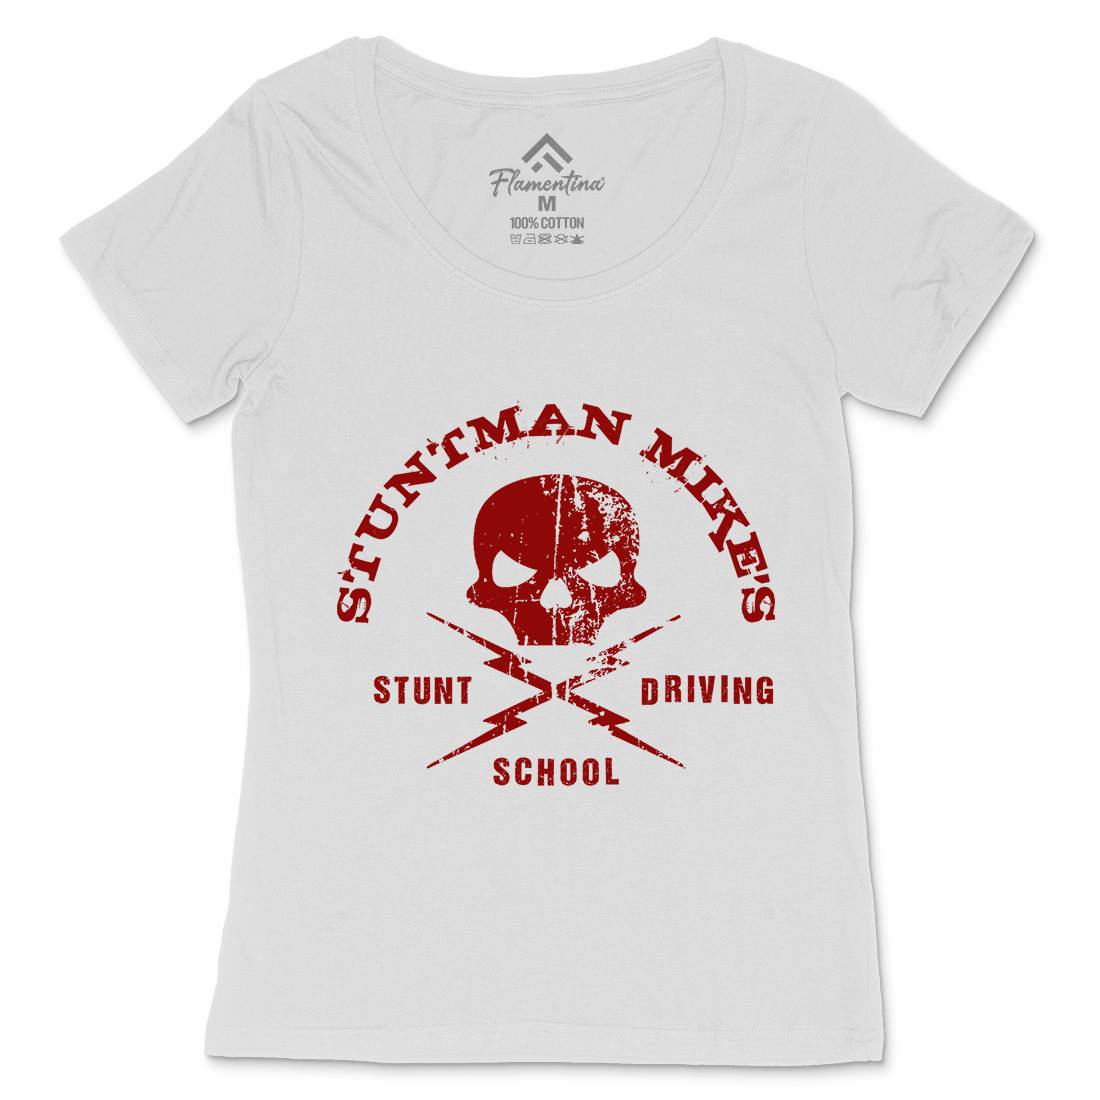 Stuntman Mike Womens Scoop Neck T-Shirt Cars D322